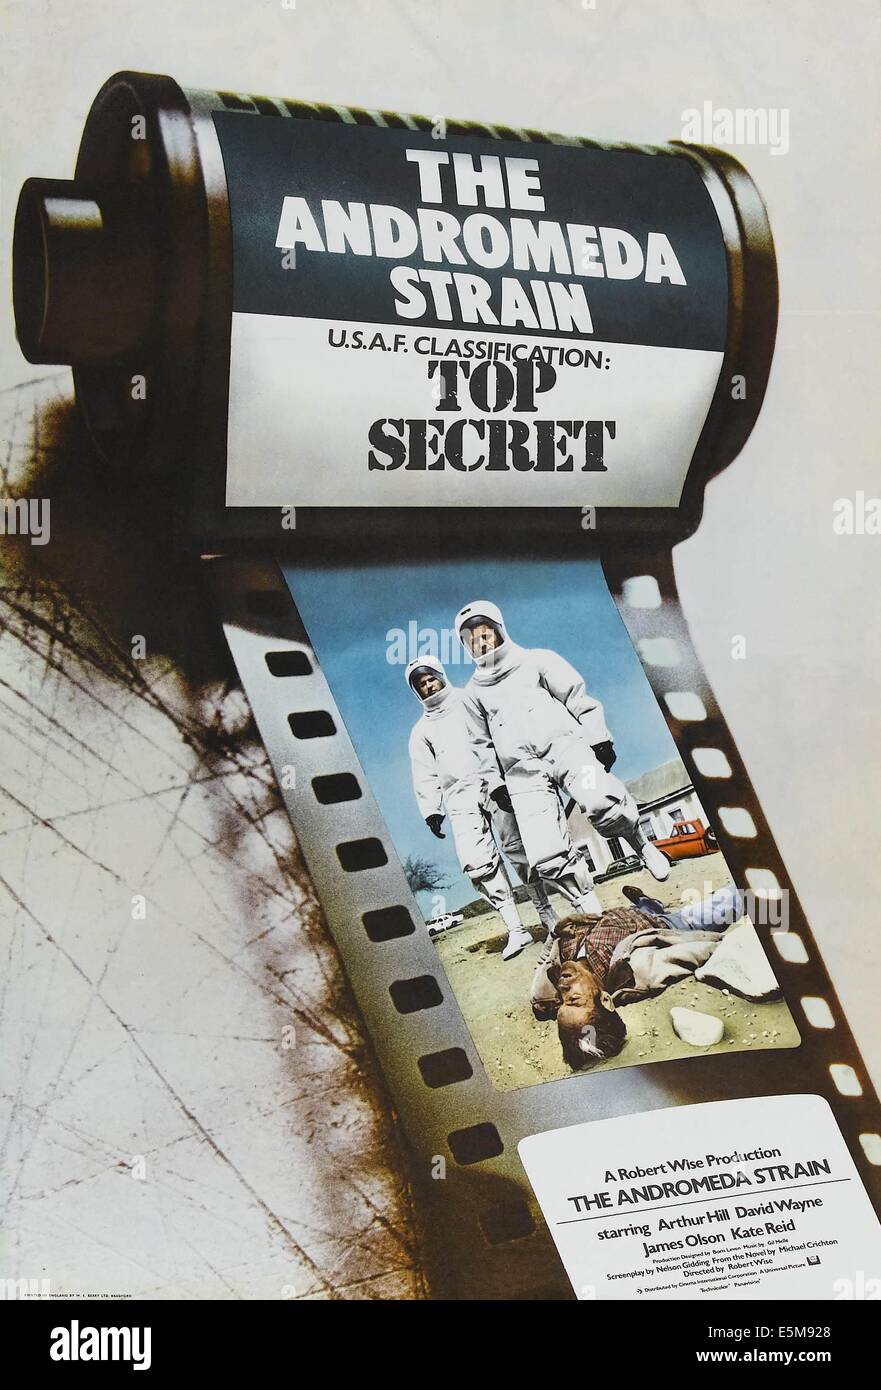 THE ANDROMEDA STRAIN, 1971 Stock Photo - Alamy